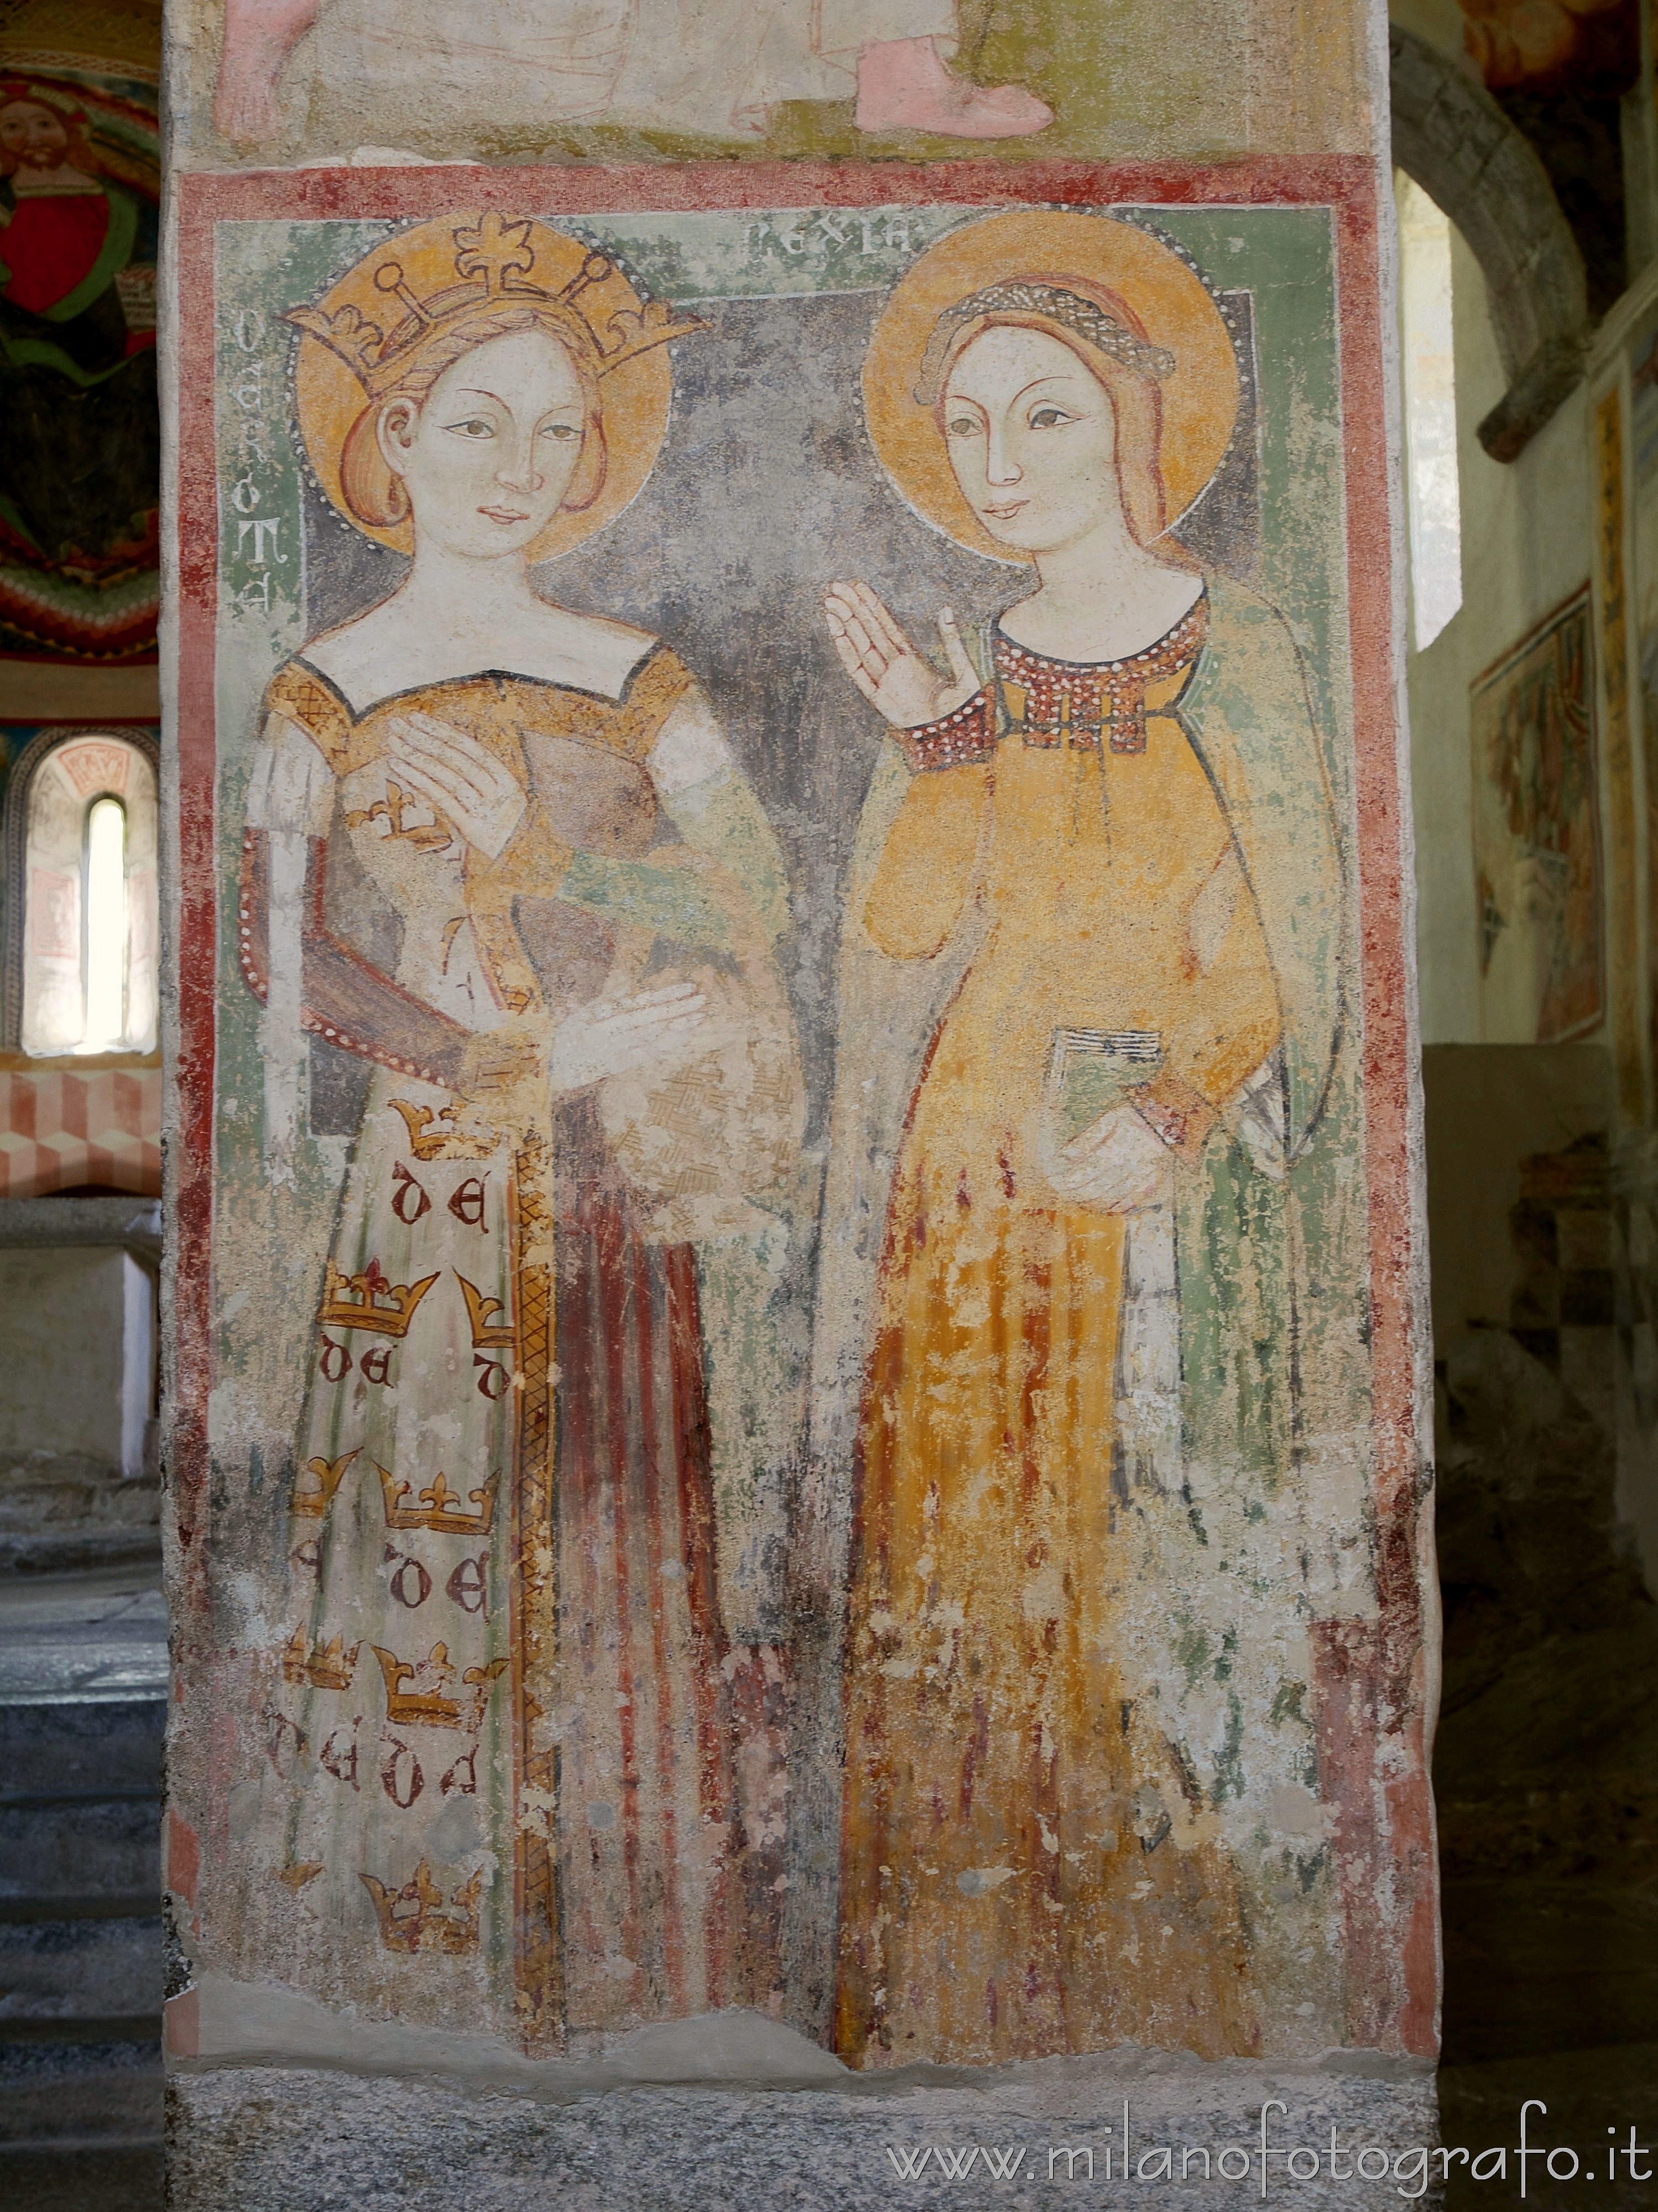 Biasca (Ticino, Switzerland): Fresco of two ladies - Biasca (Ticino, Switzerland)